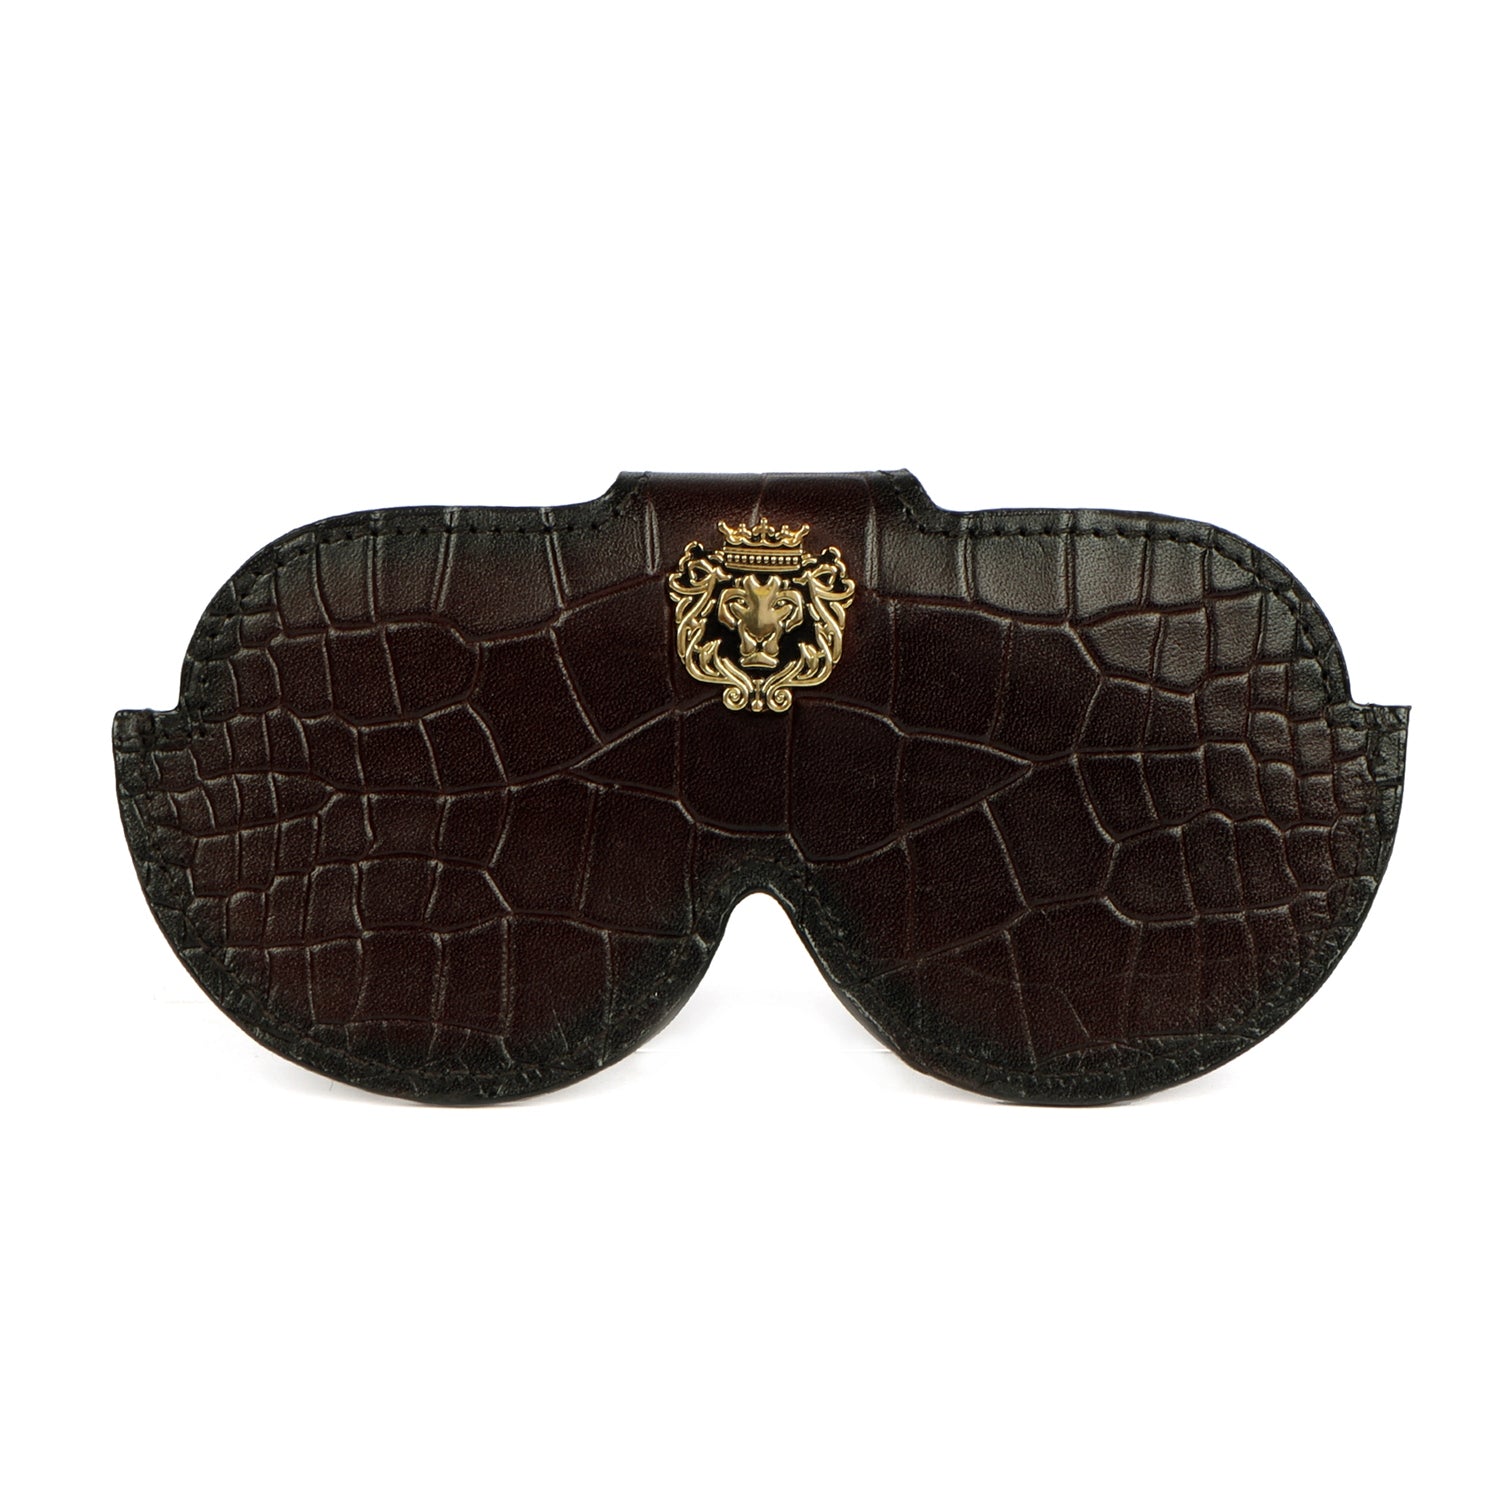 Croco Print Dark Brown Leather With Metal Lion Eyewear Glasses Cover by Brune & Bareskin